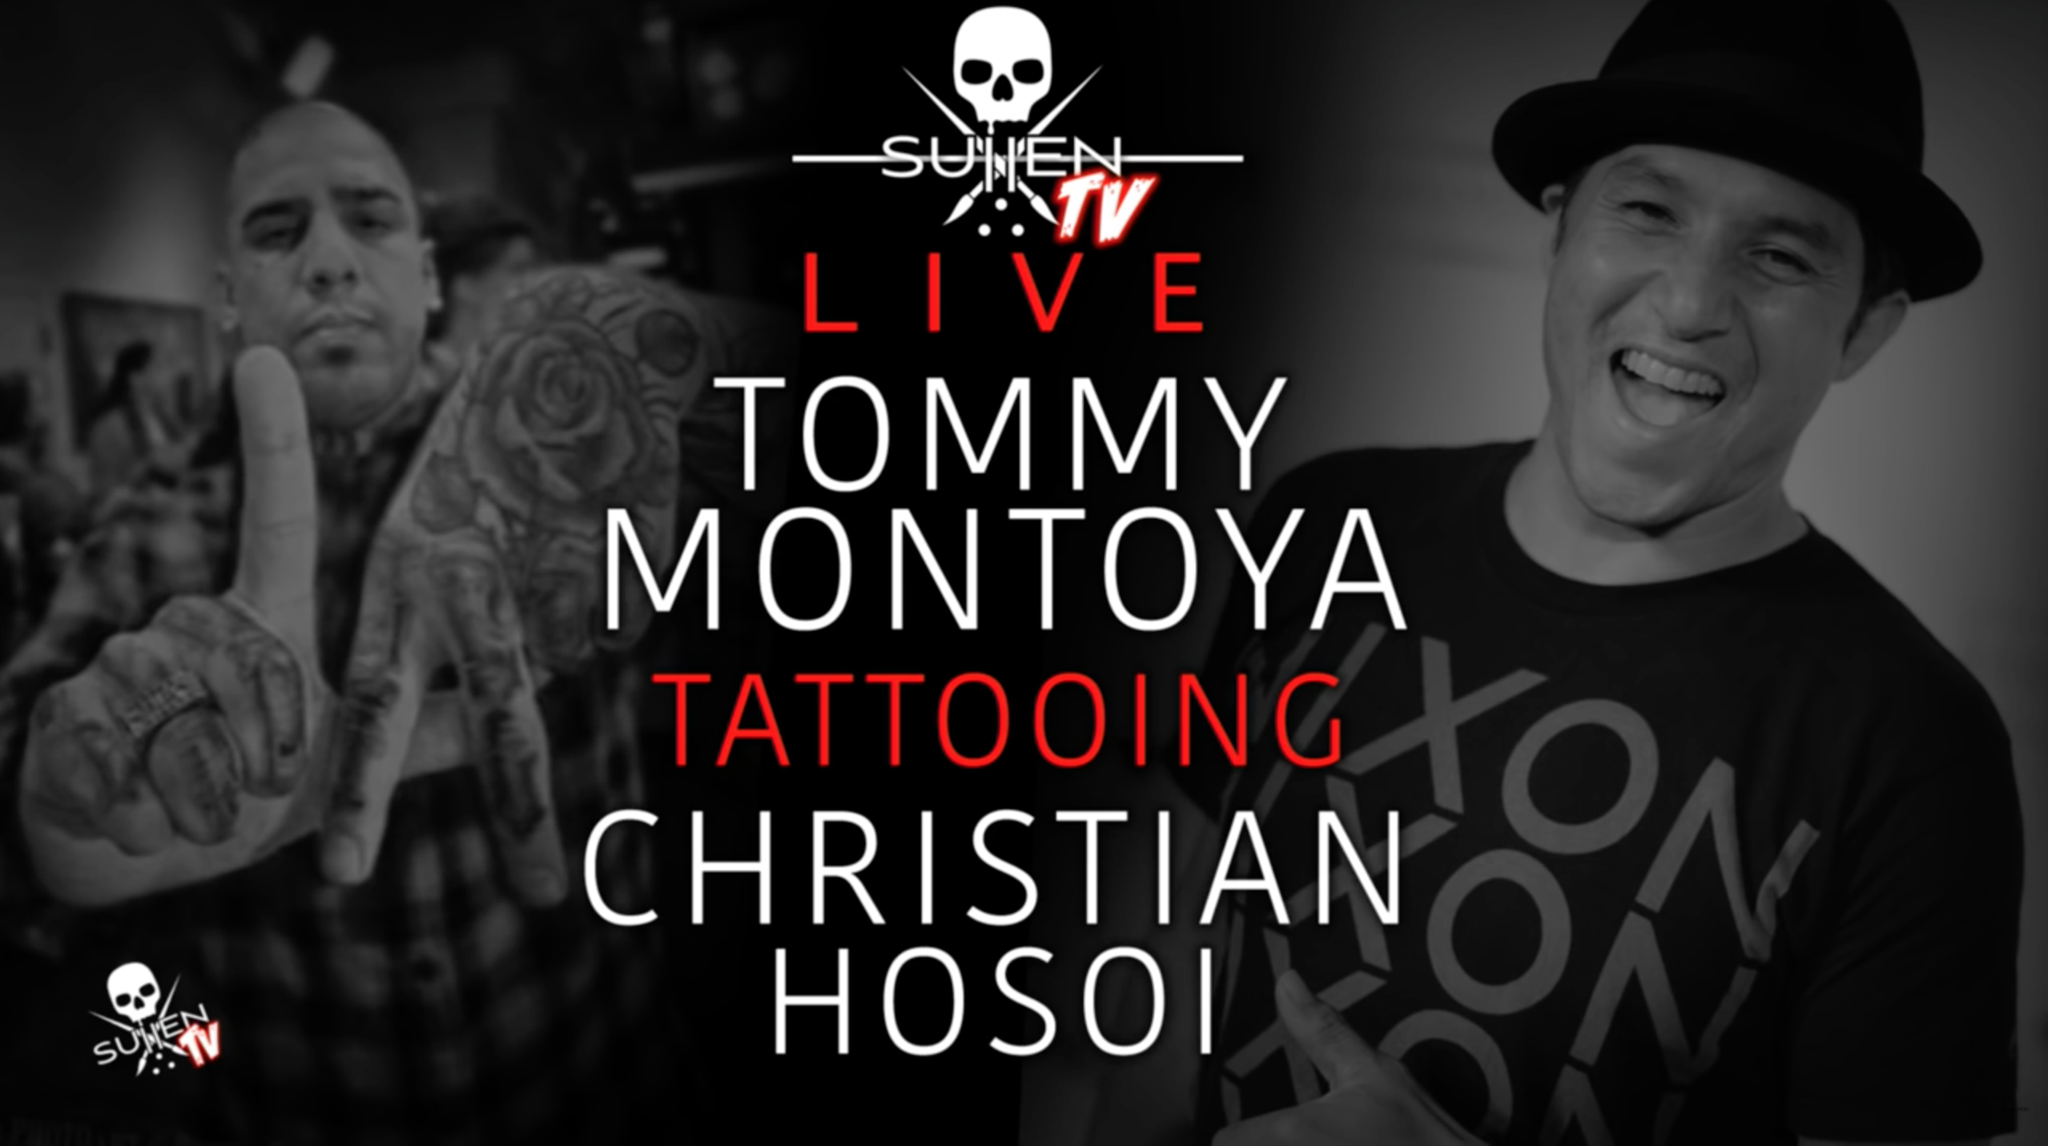 Live Tattoo | Tommy Montoya Tattooing Christian Hosoi - Sullen TV